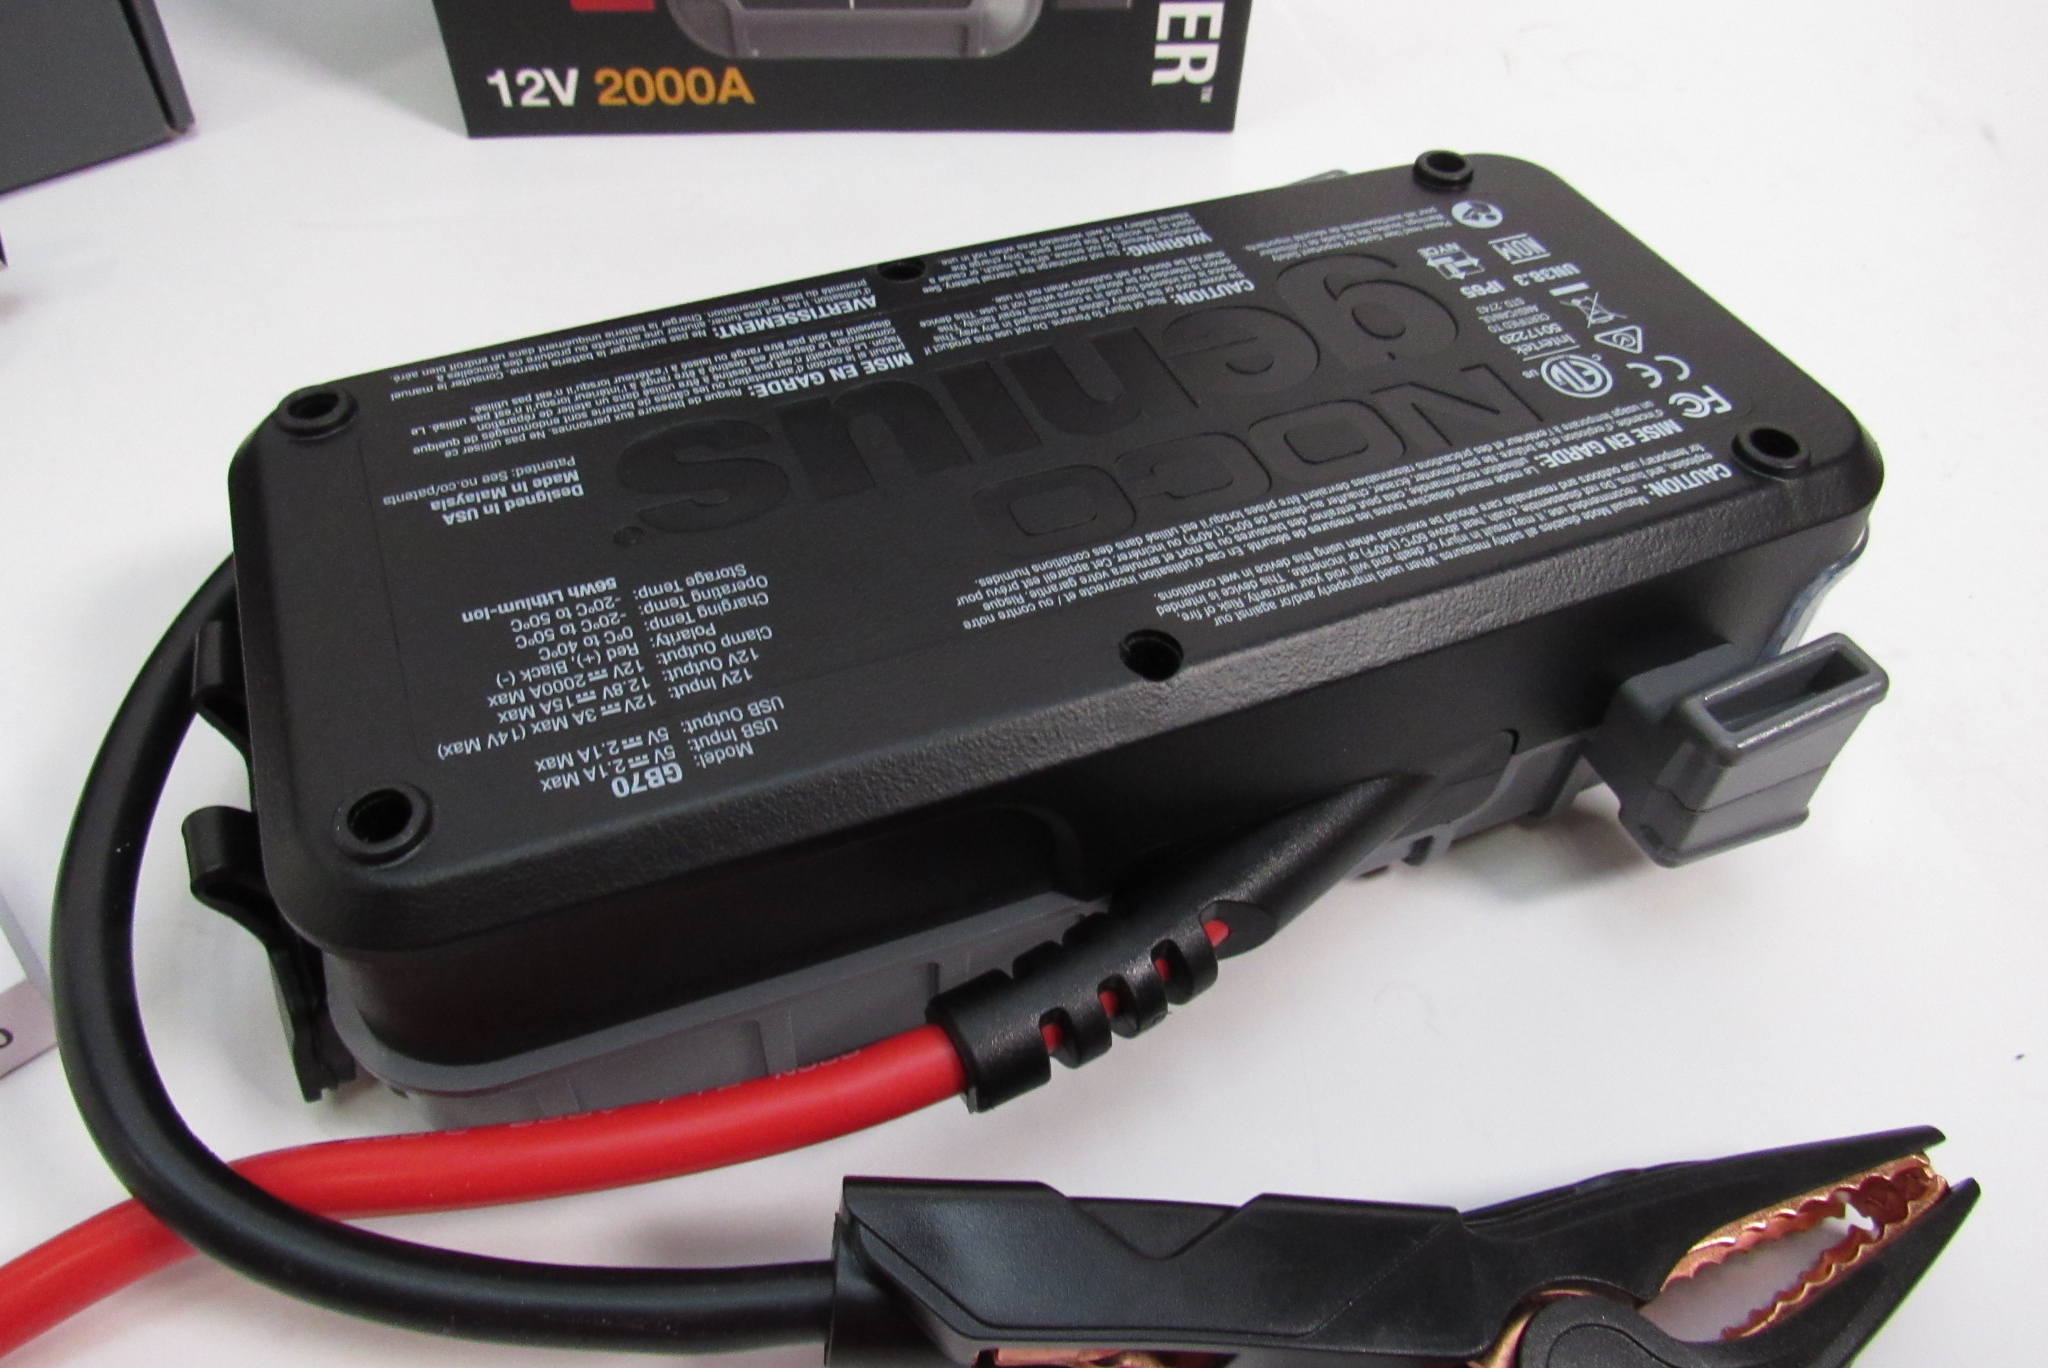 NOCO BOOST HD GB70 12V 2000A Lithium Portable Jump Starter